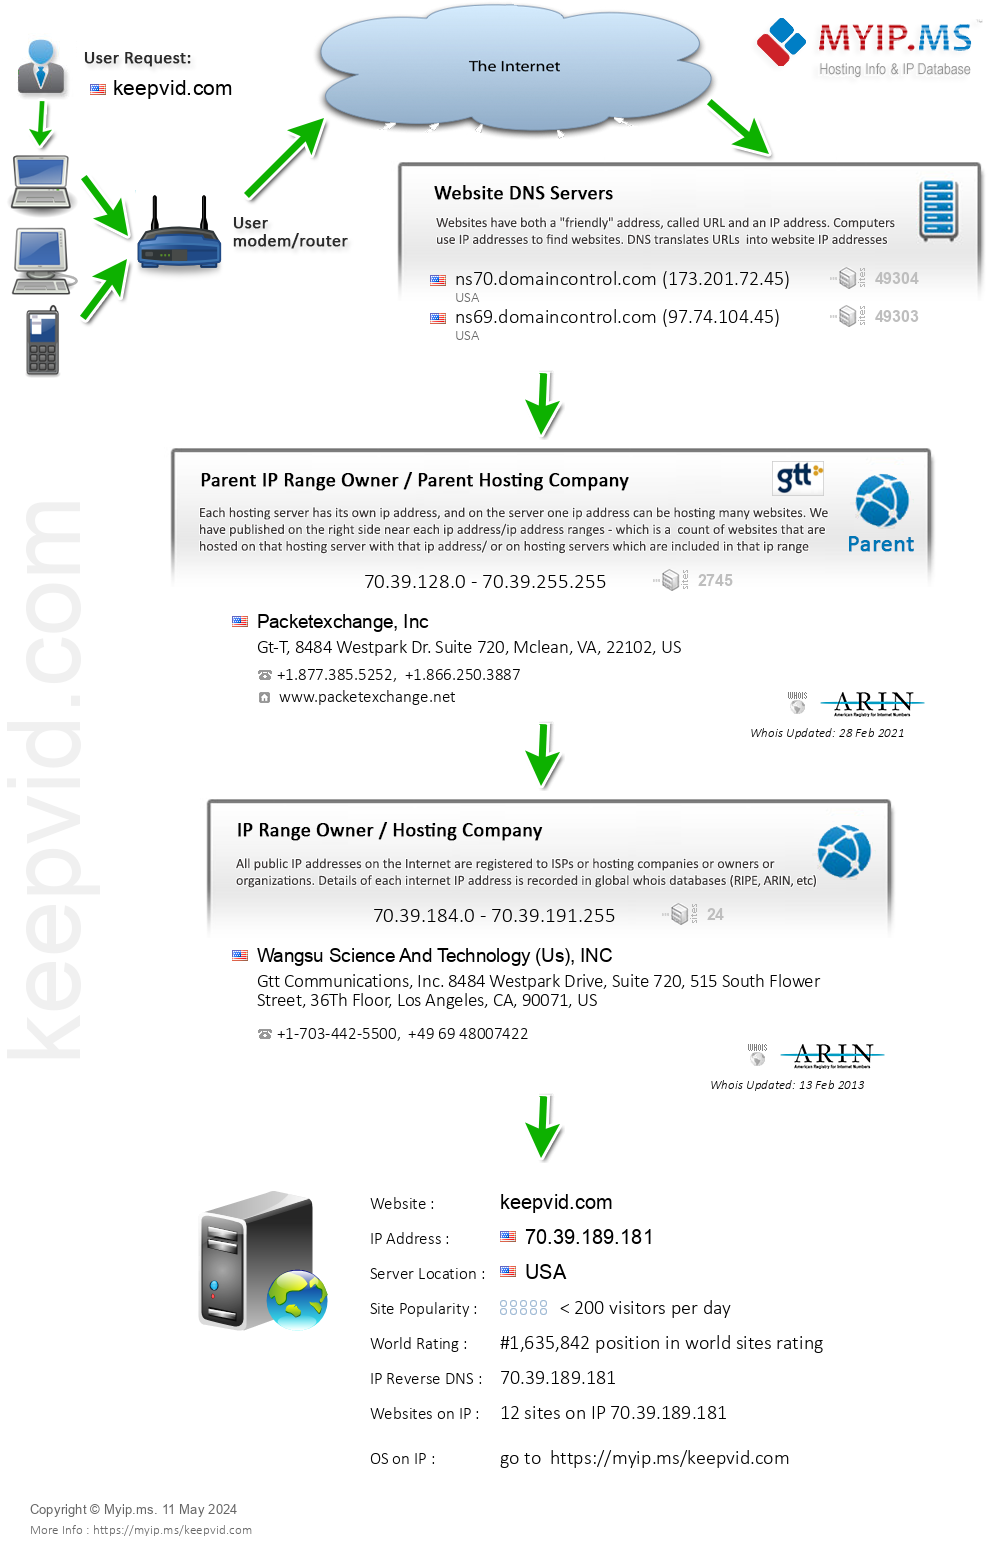 Keepvid.com - Website Hosting Visual IP Diagram